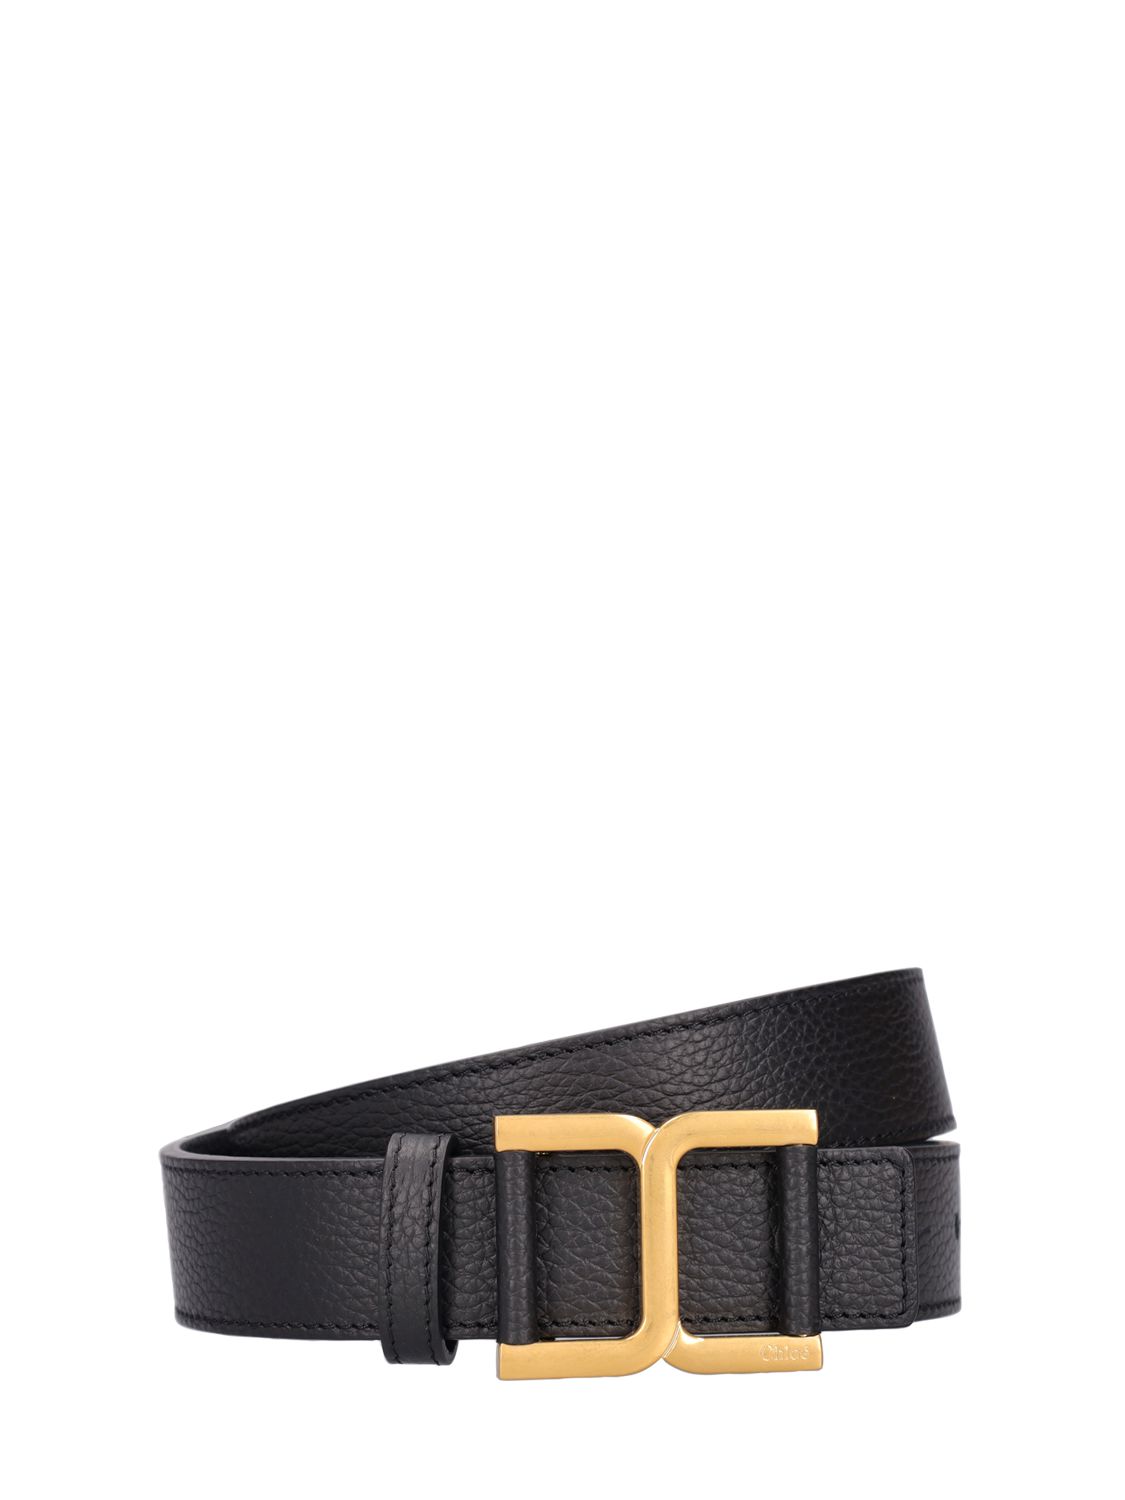 CHLOÉ Marcie Leather Belt